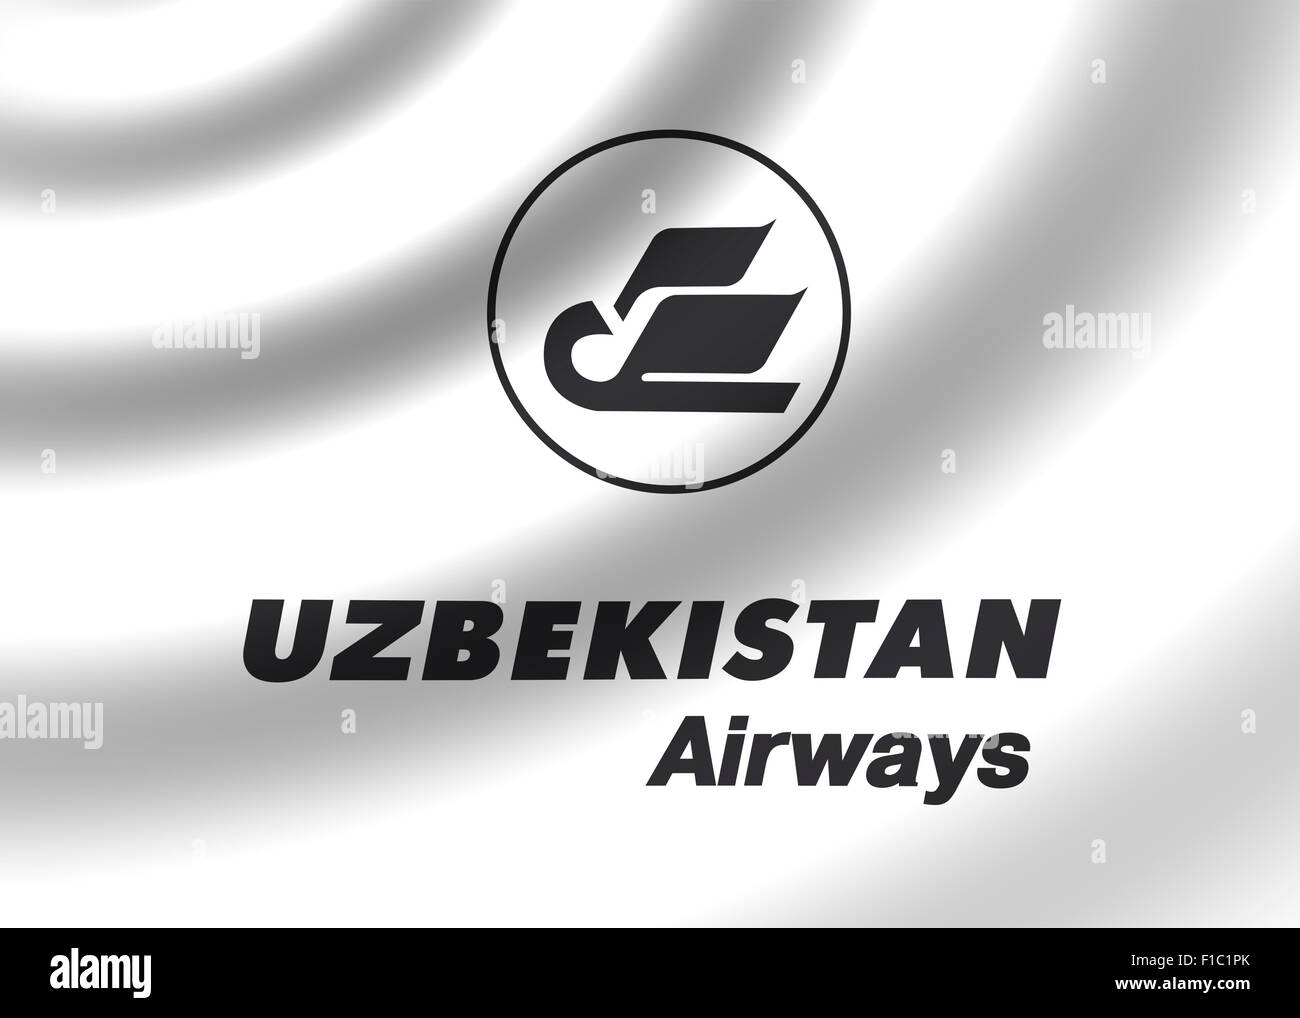 Uzbekistan Airways logo icon flag symbol emblem sign Stock Photo